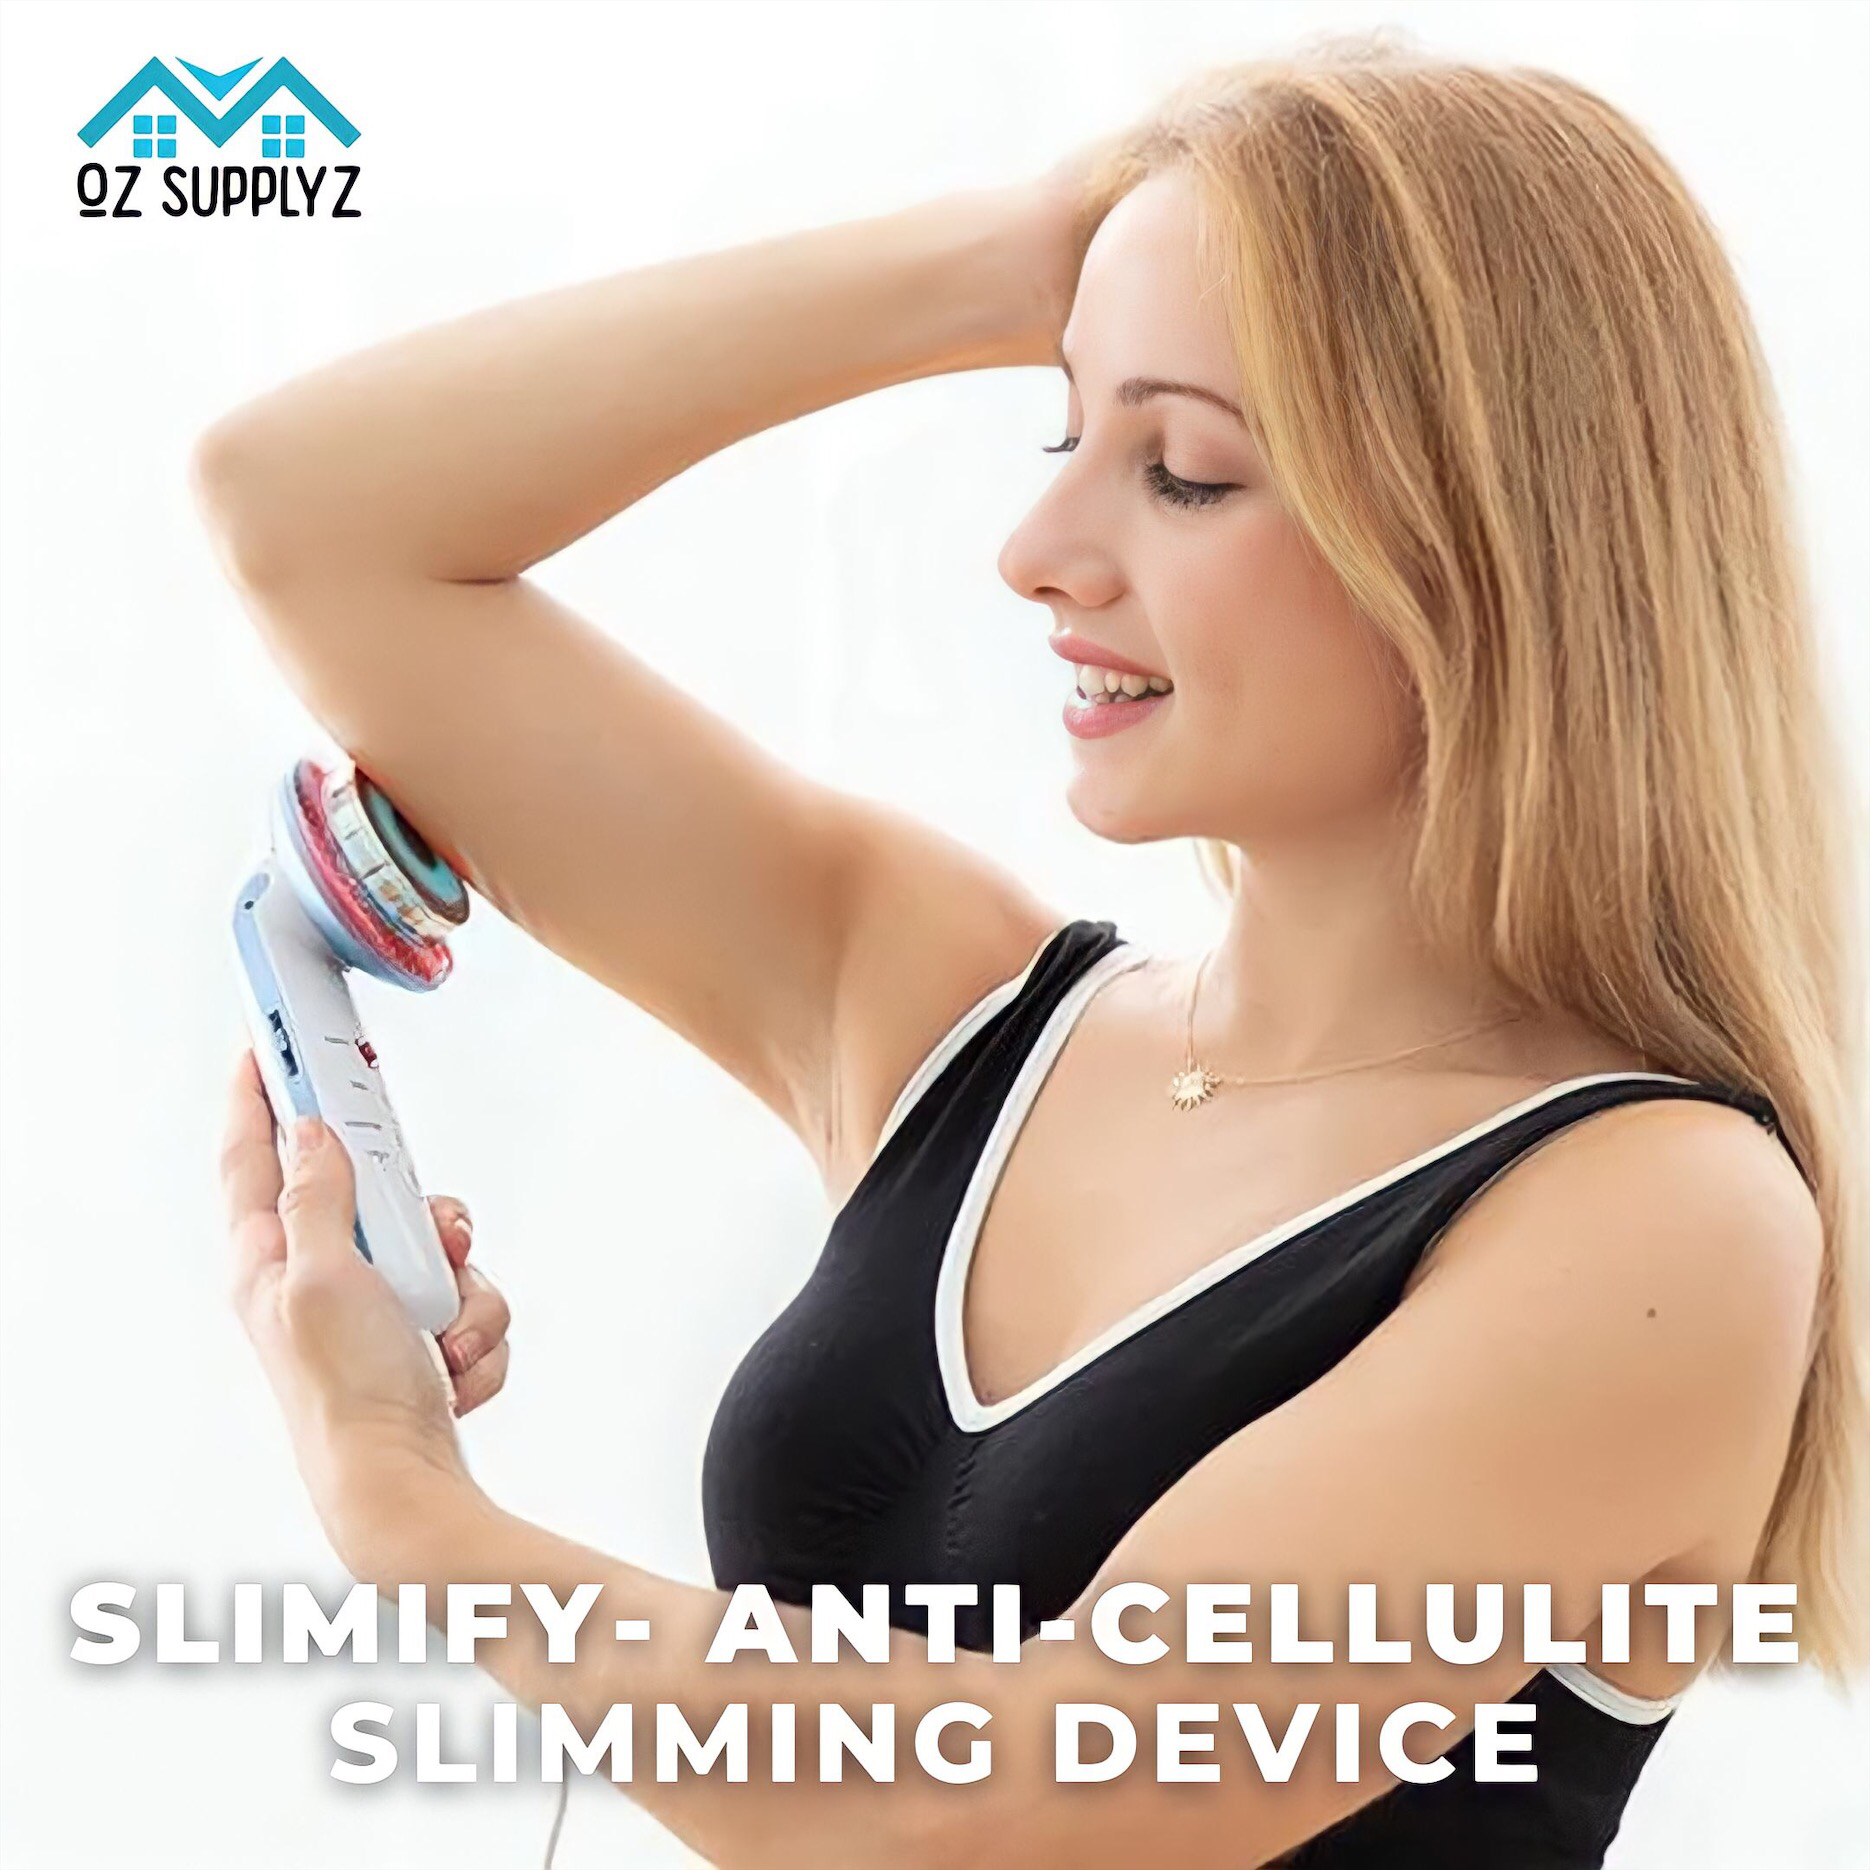 CelluLift- Anti-Cellulite Slimming Device – oz supplyz